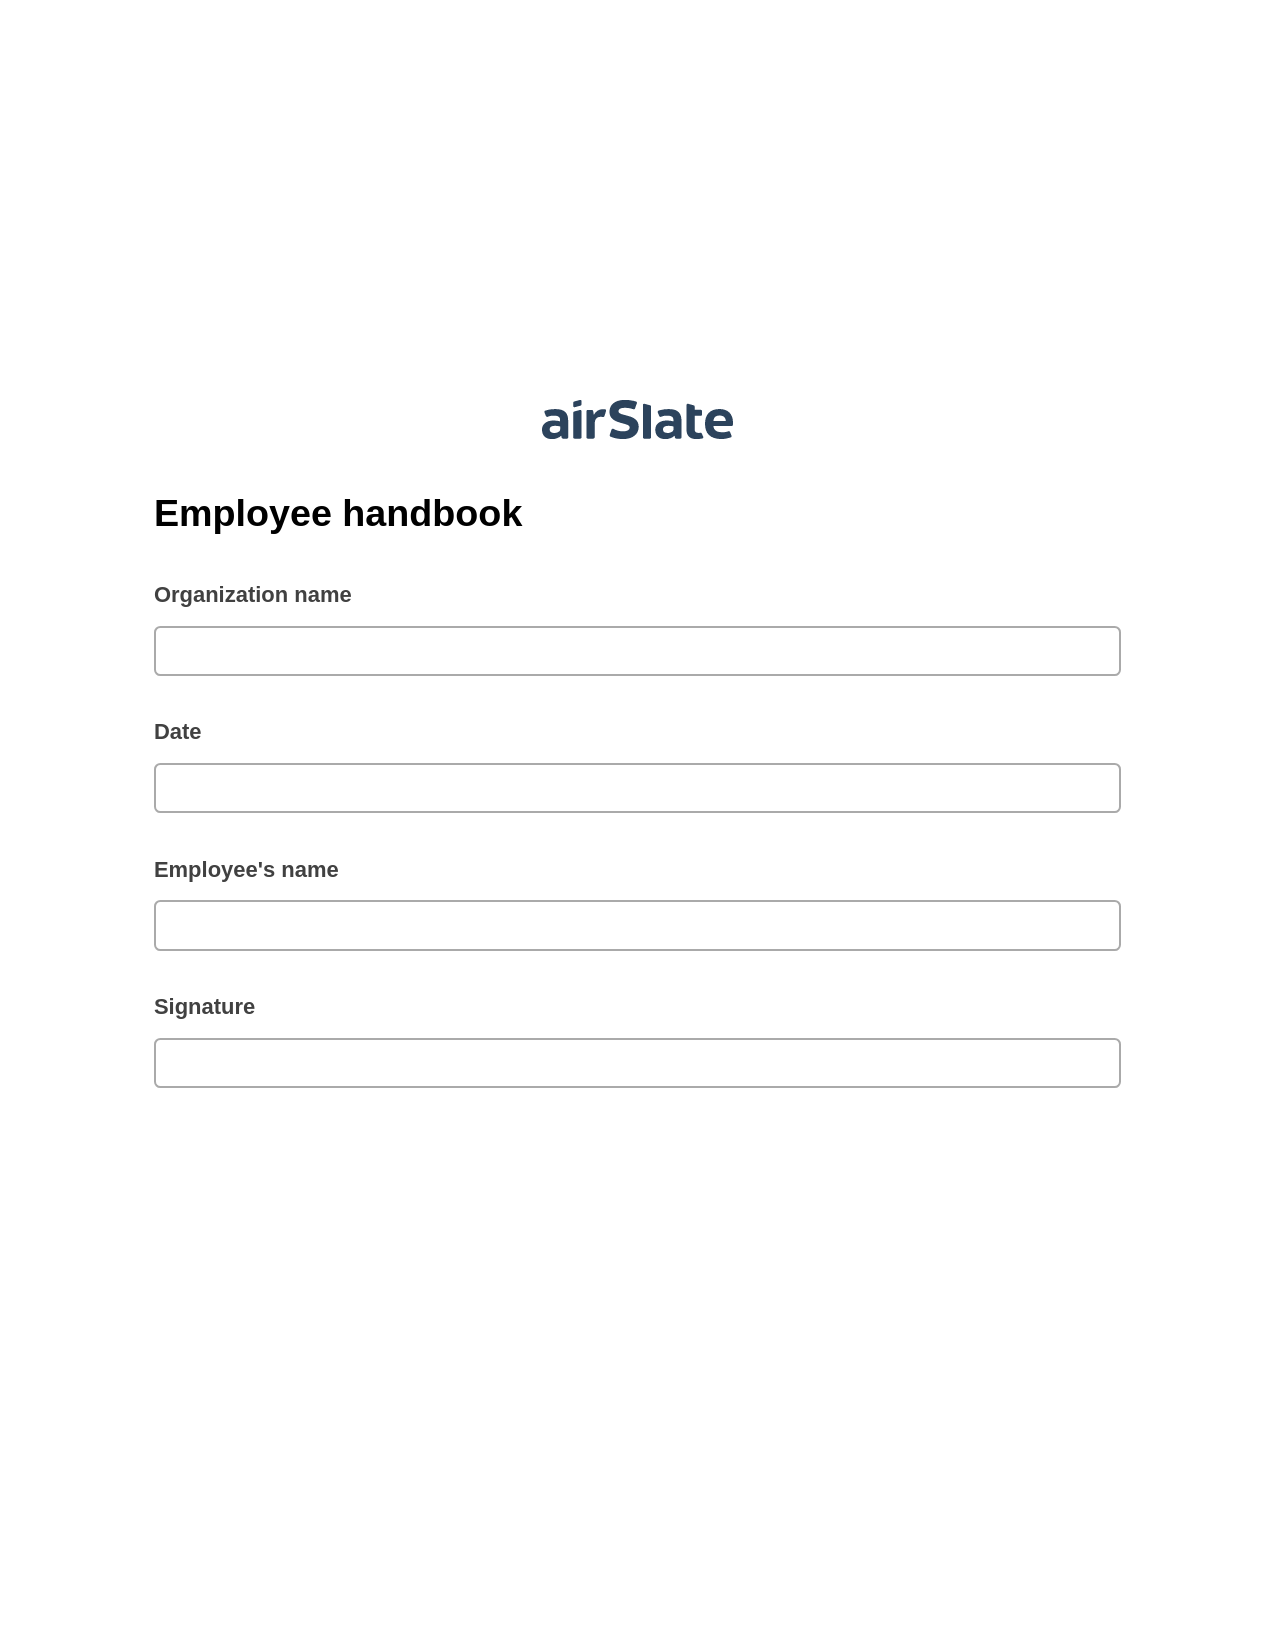 Employee handbook Pre-fill from CSV File Bot, Document Hide Bot, OneDrive Bot